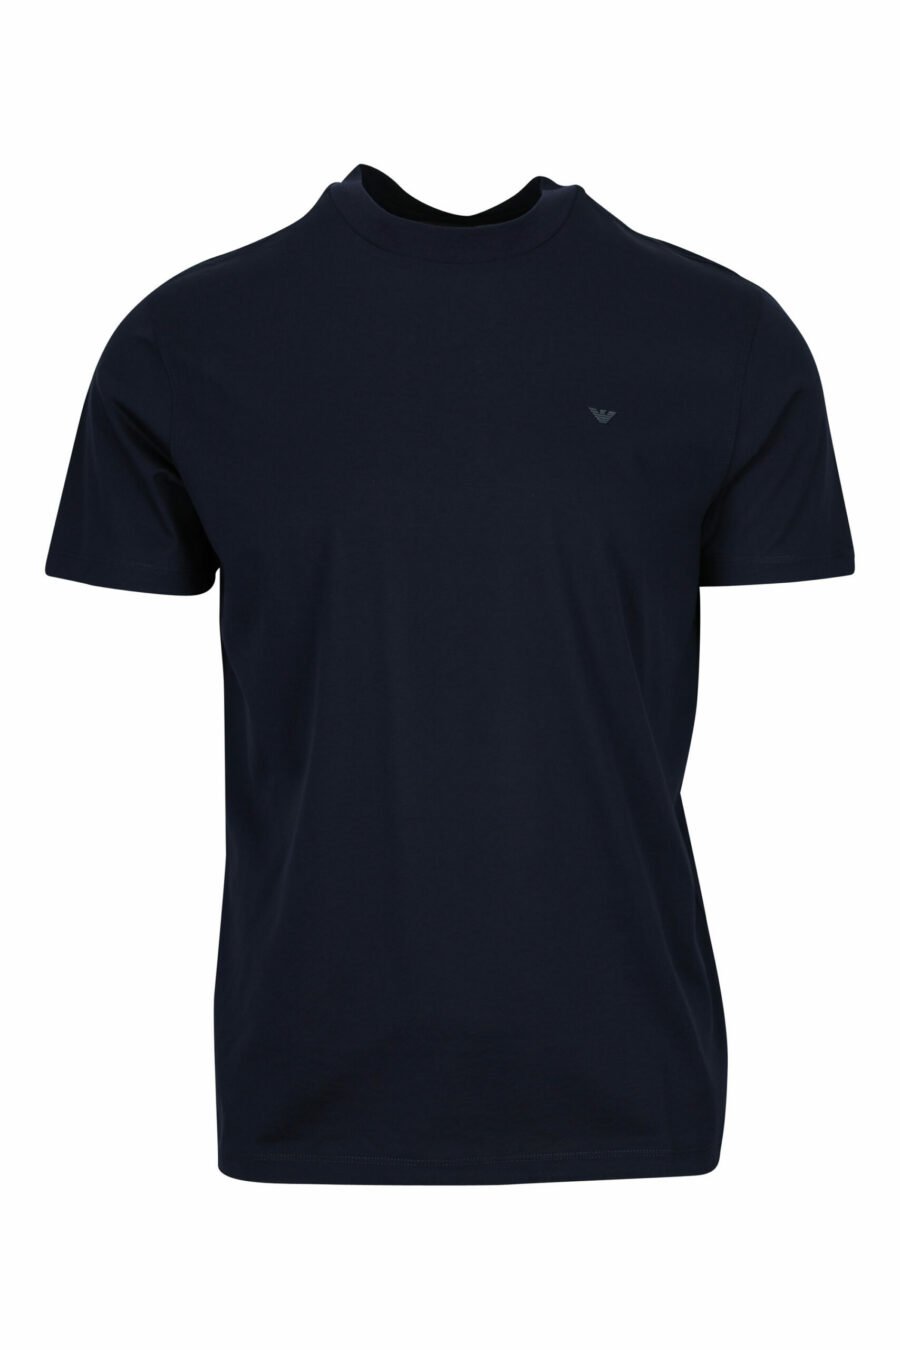 T-shirt bleu foncé avec mini logo de l'aigle - 8058997155687 scaled